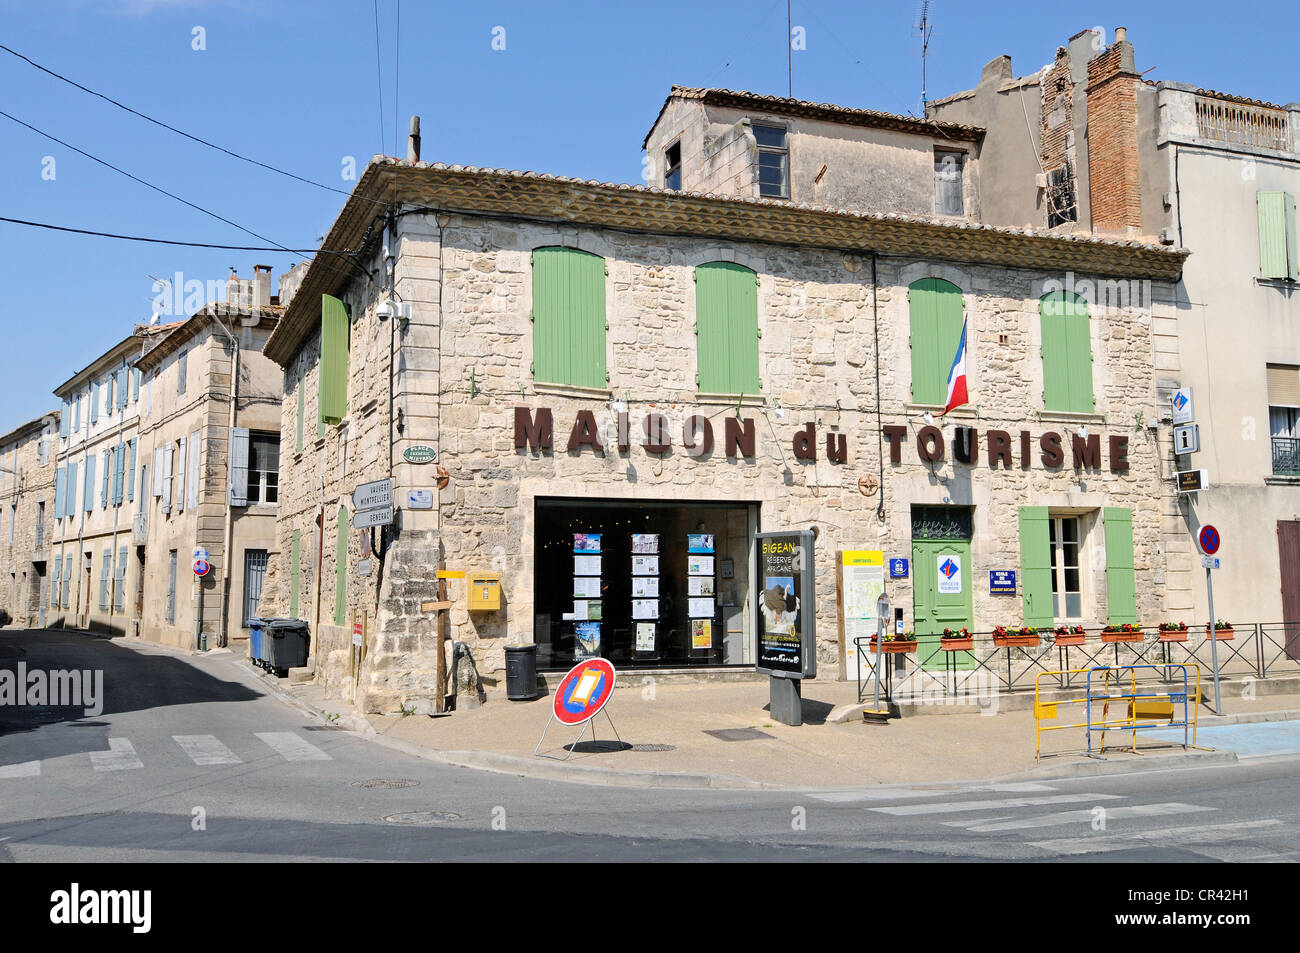 Tourist information, Saint Gilles du Gard, Languedoc-Roussillon region, France, Europe Stock Photo